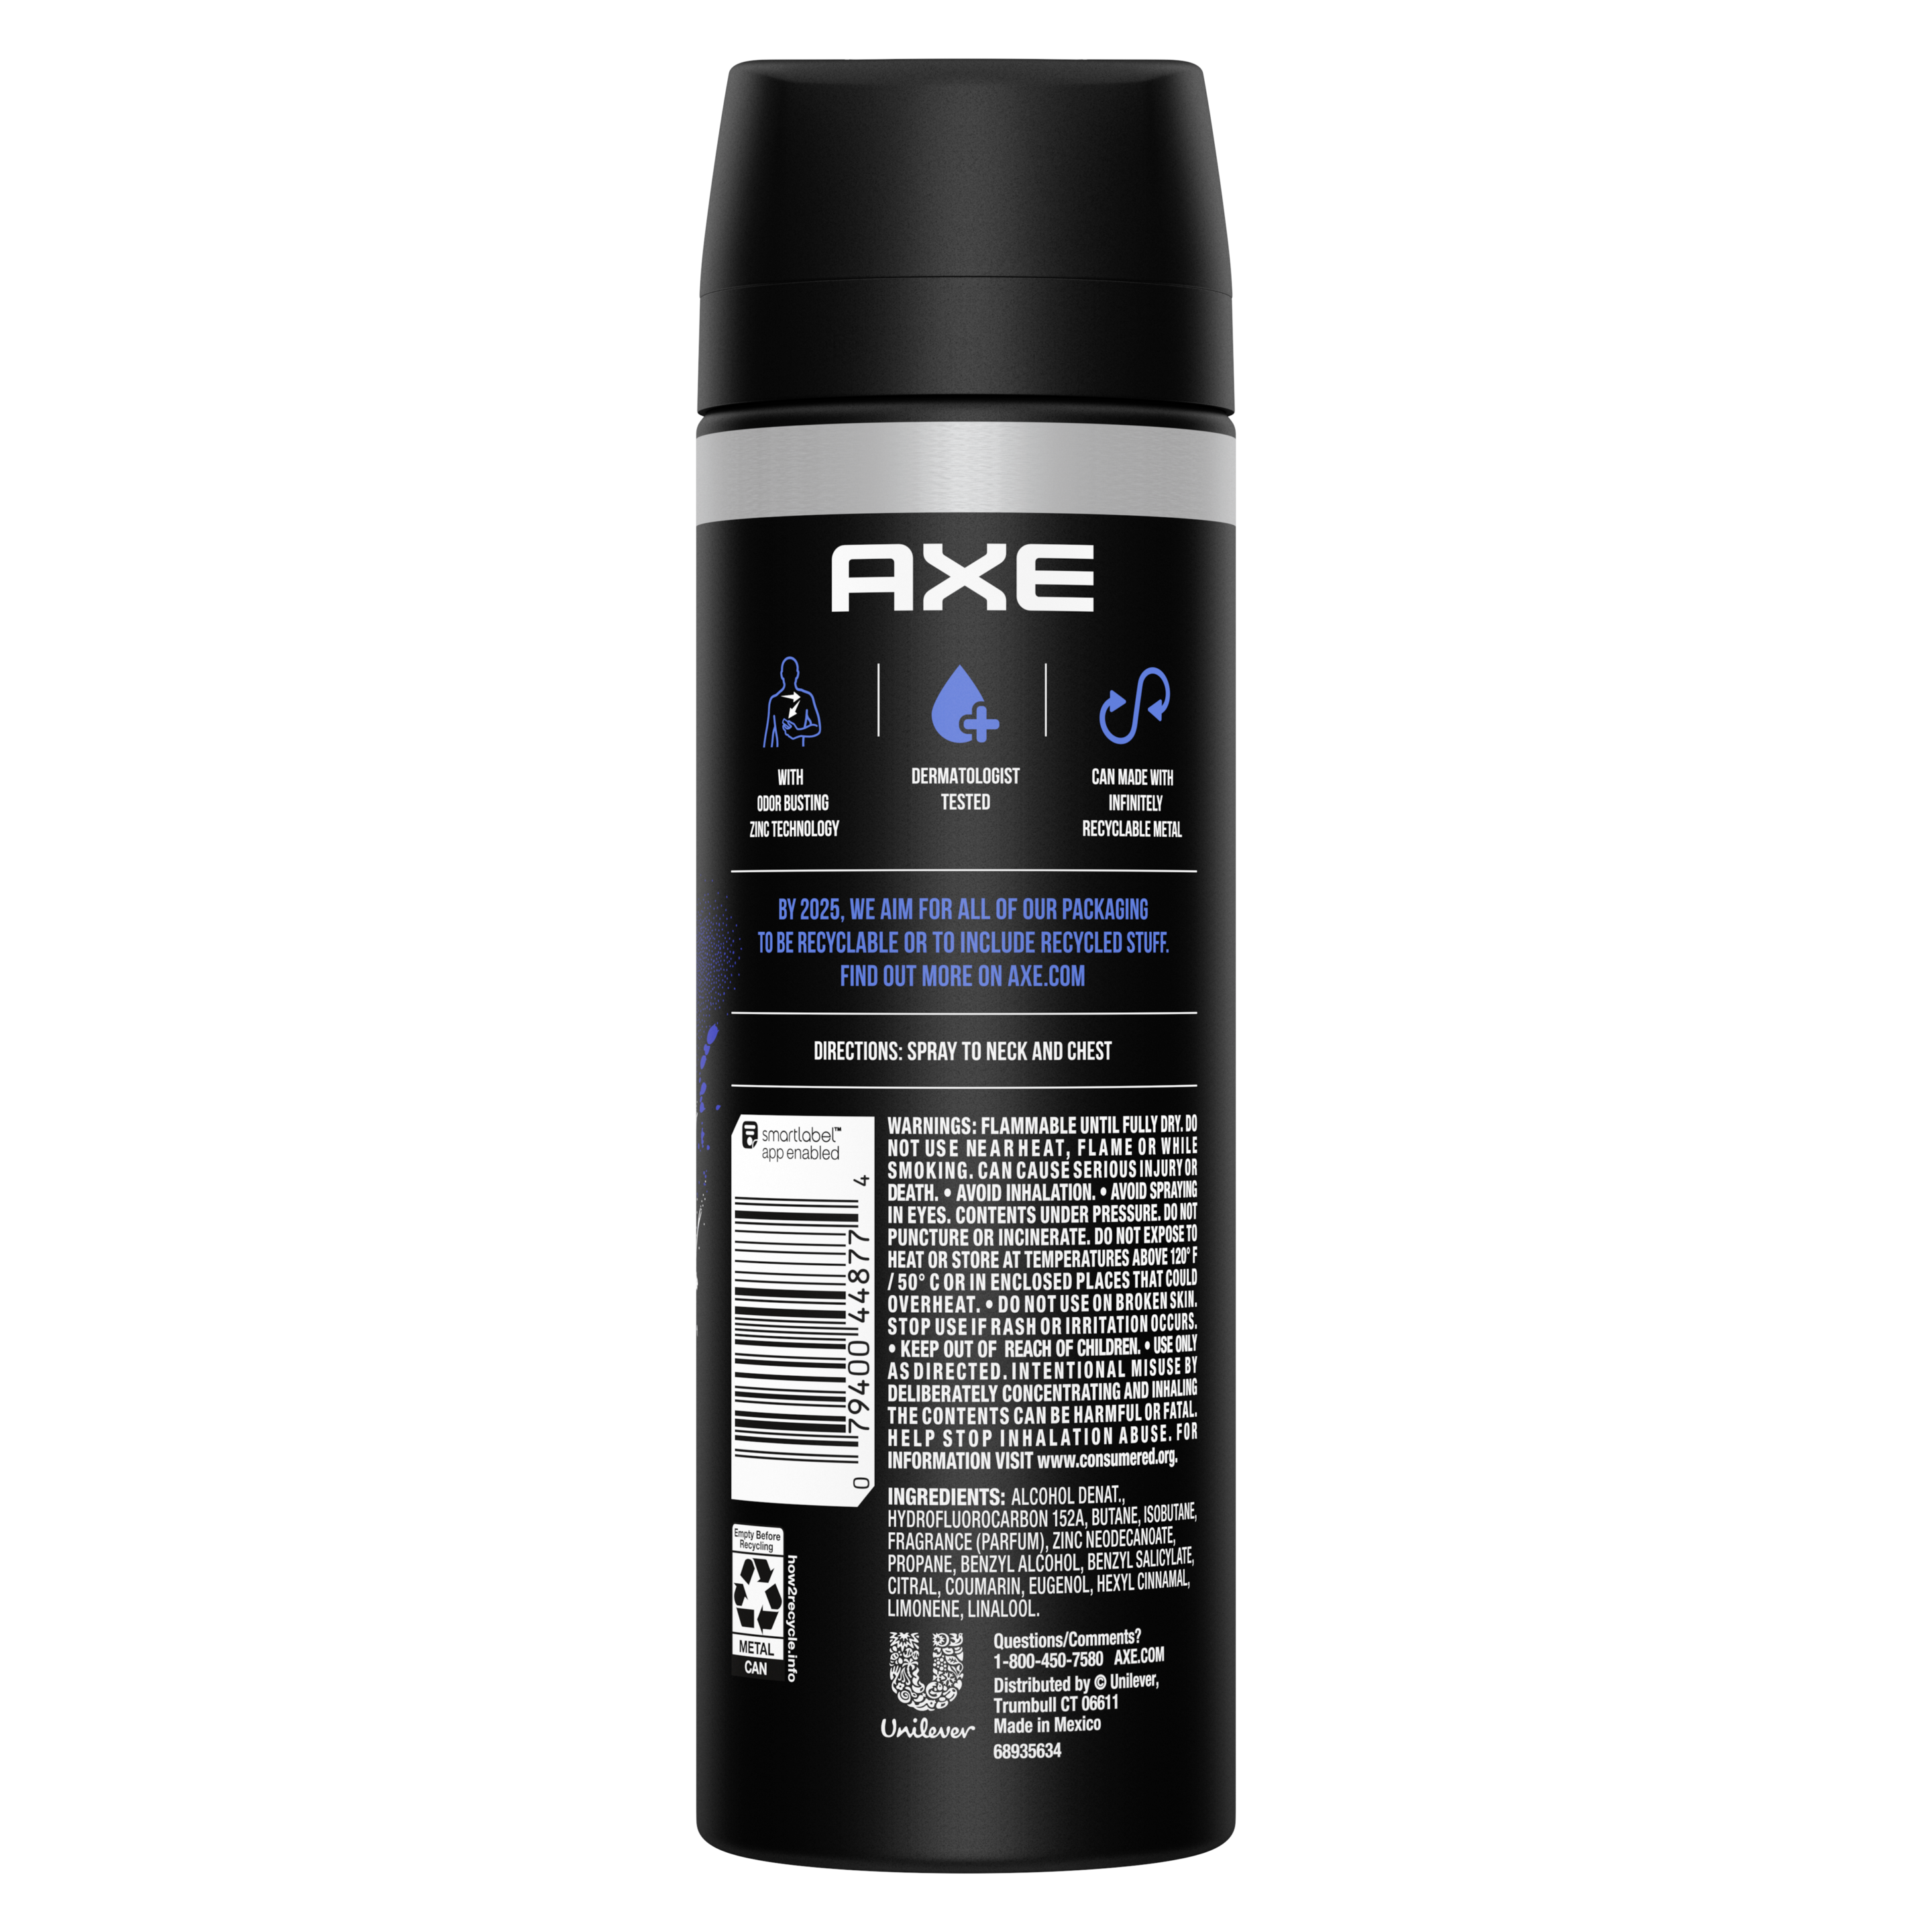 Phoenix XL Deodorant Body Spray, Men's Deodorant Spray